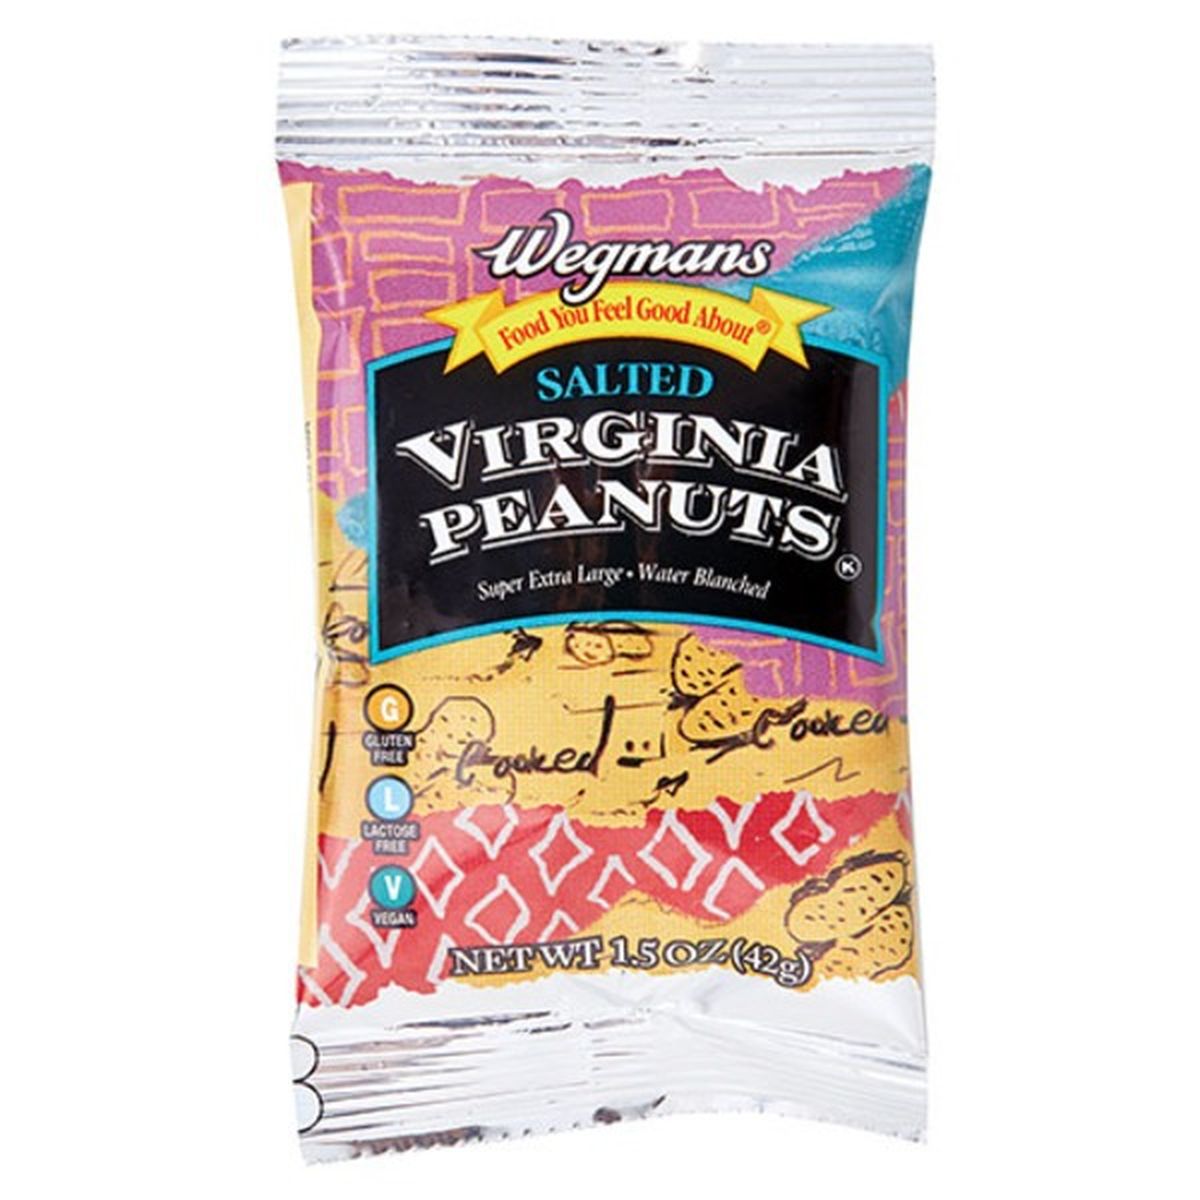 Calories in Wegmans Salted Virginia Peanuts